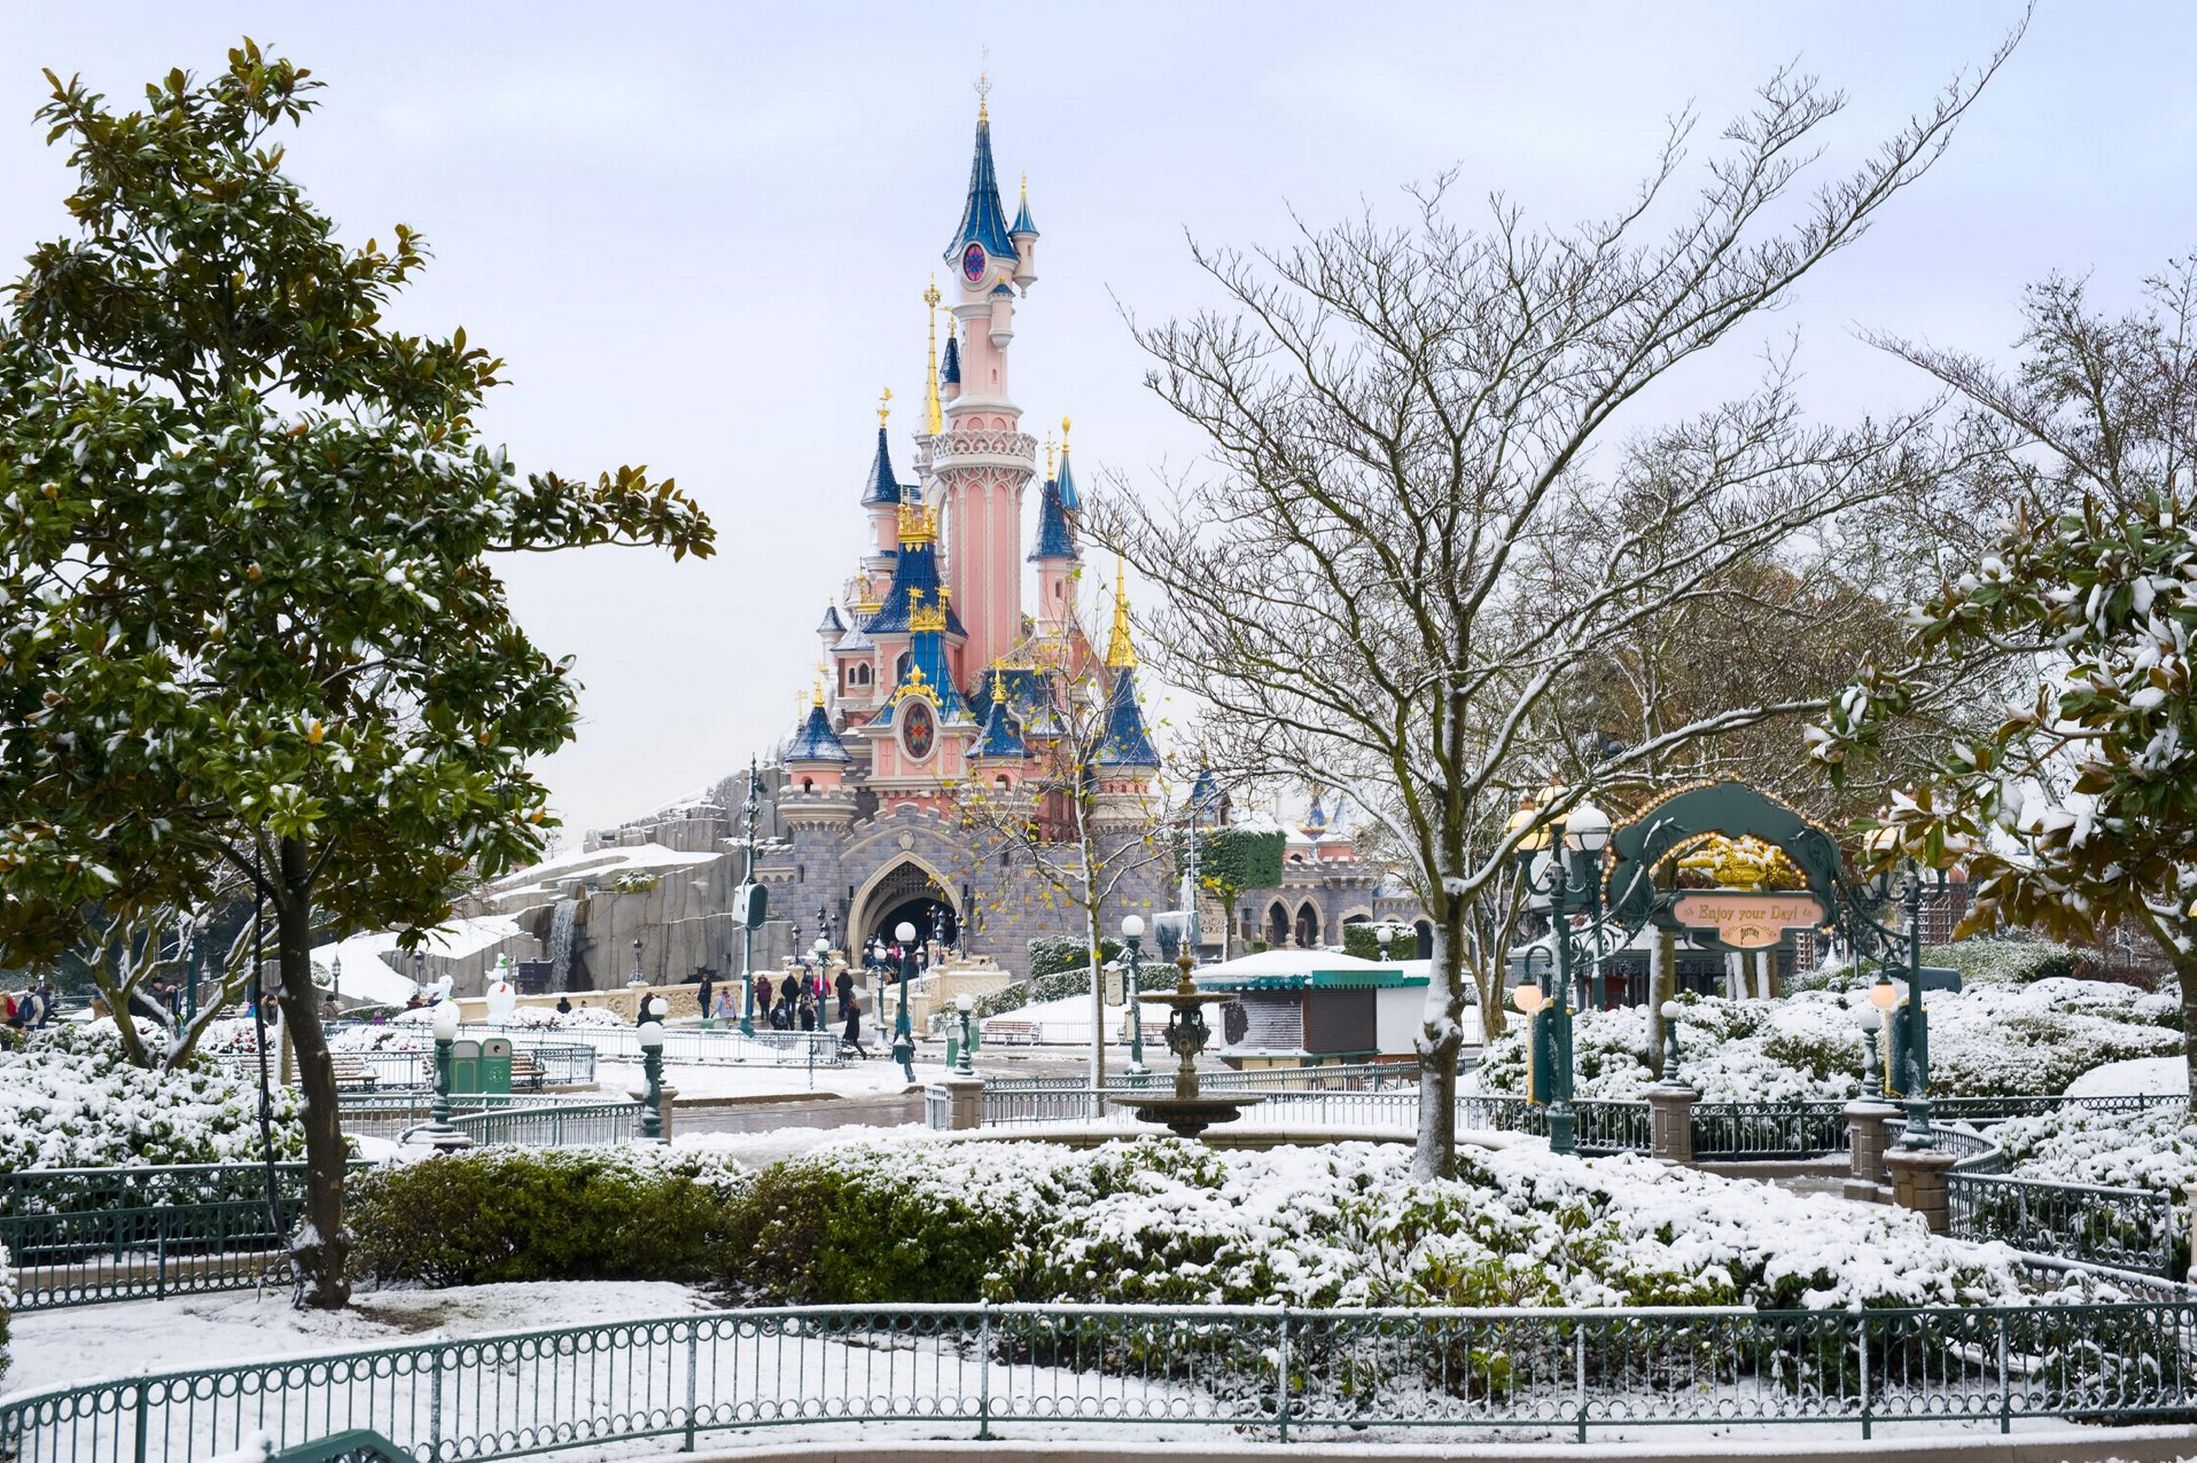 Dedicated to DLP on X: The stunning Sleeping Beauty Castle - Disneyland  Paris press photo from November 2006  / X